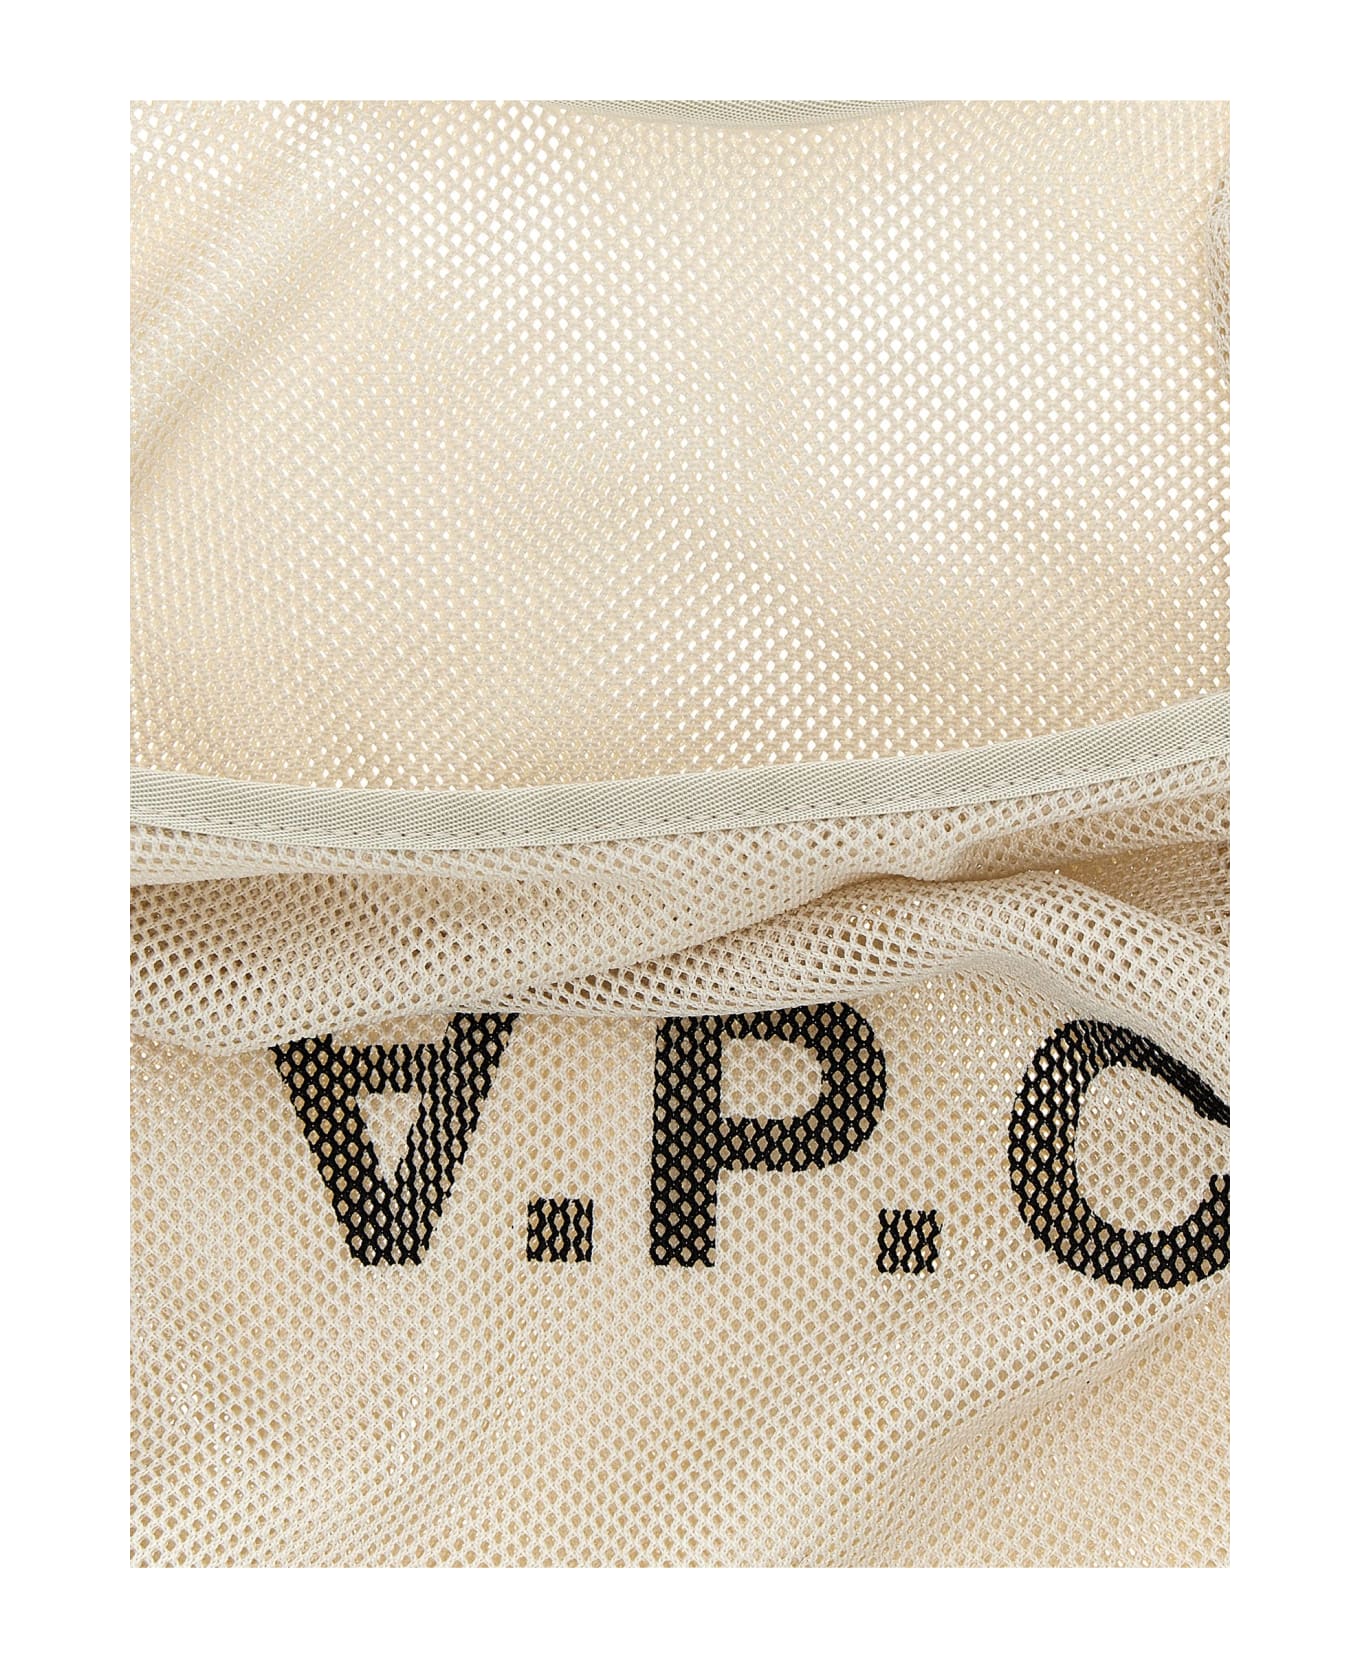 A.P.C. Logo-printed Shopping Tote Bag - White